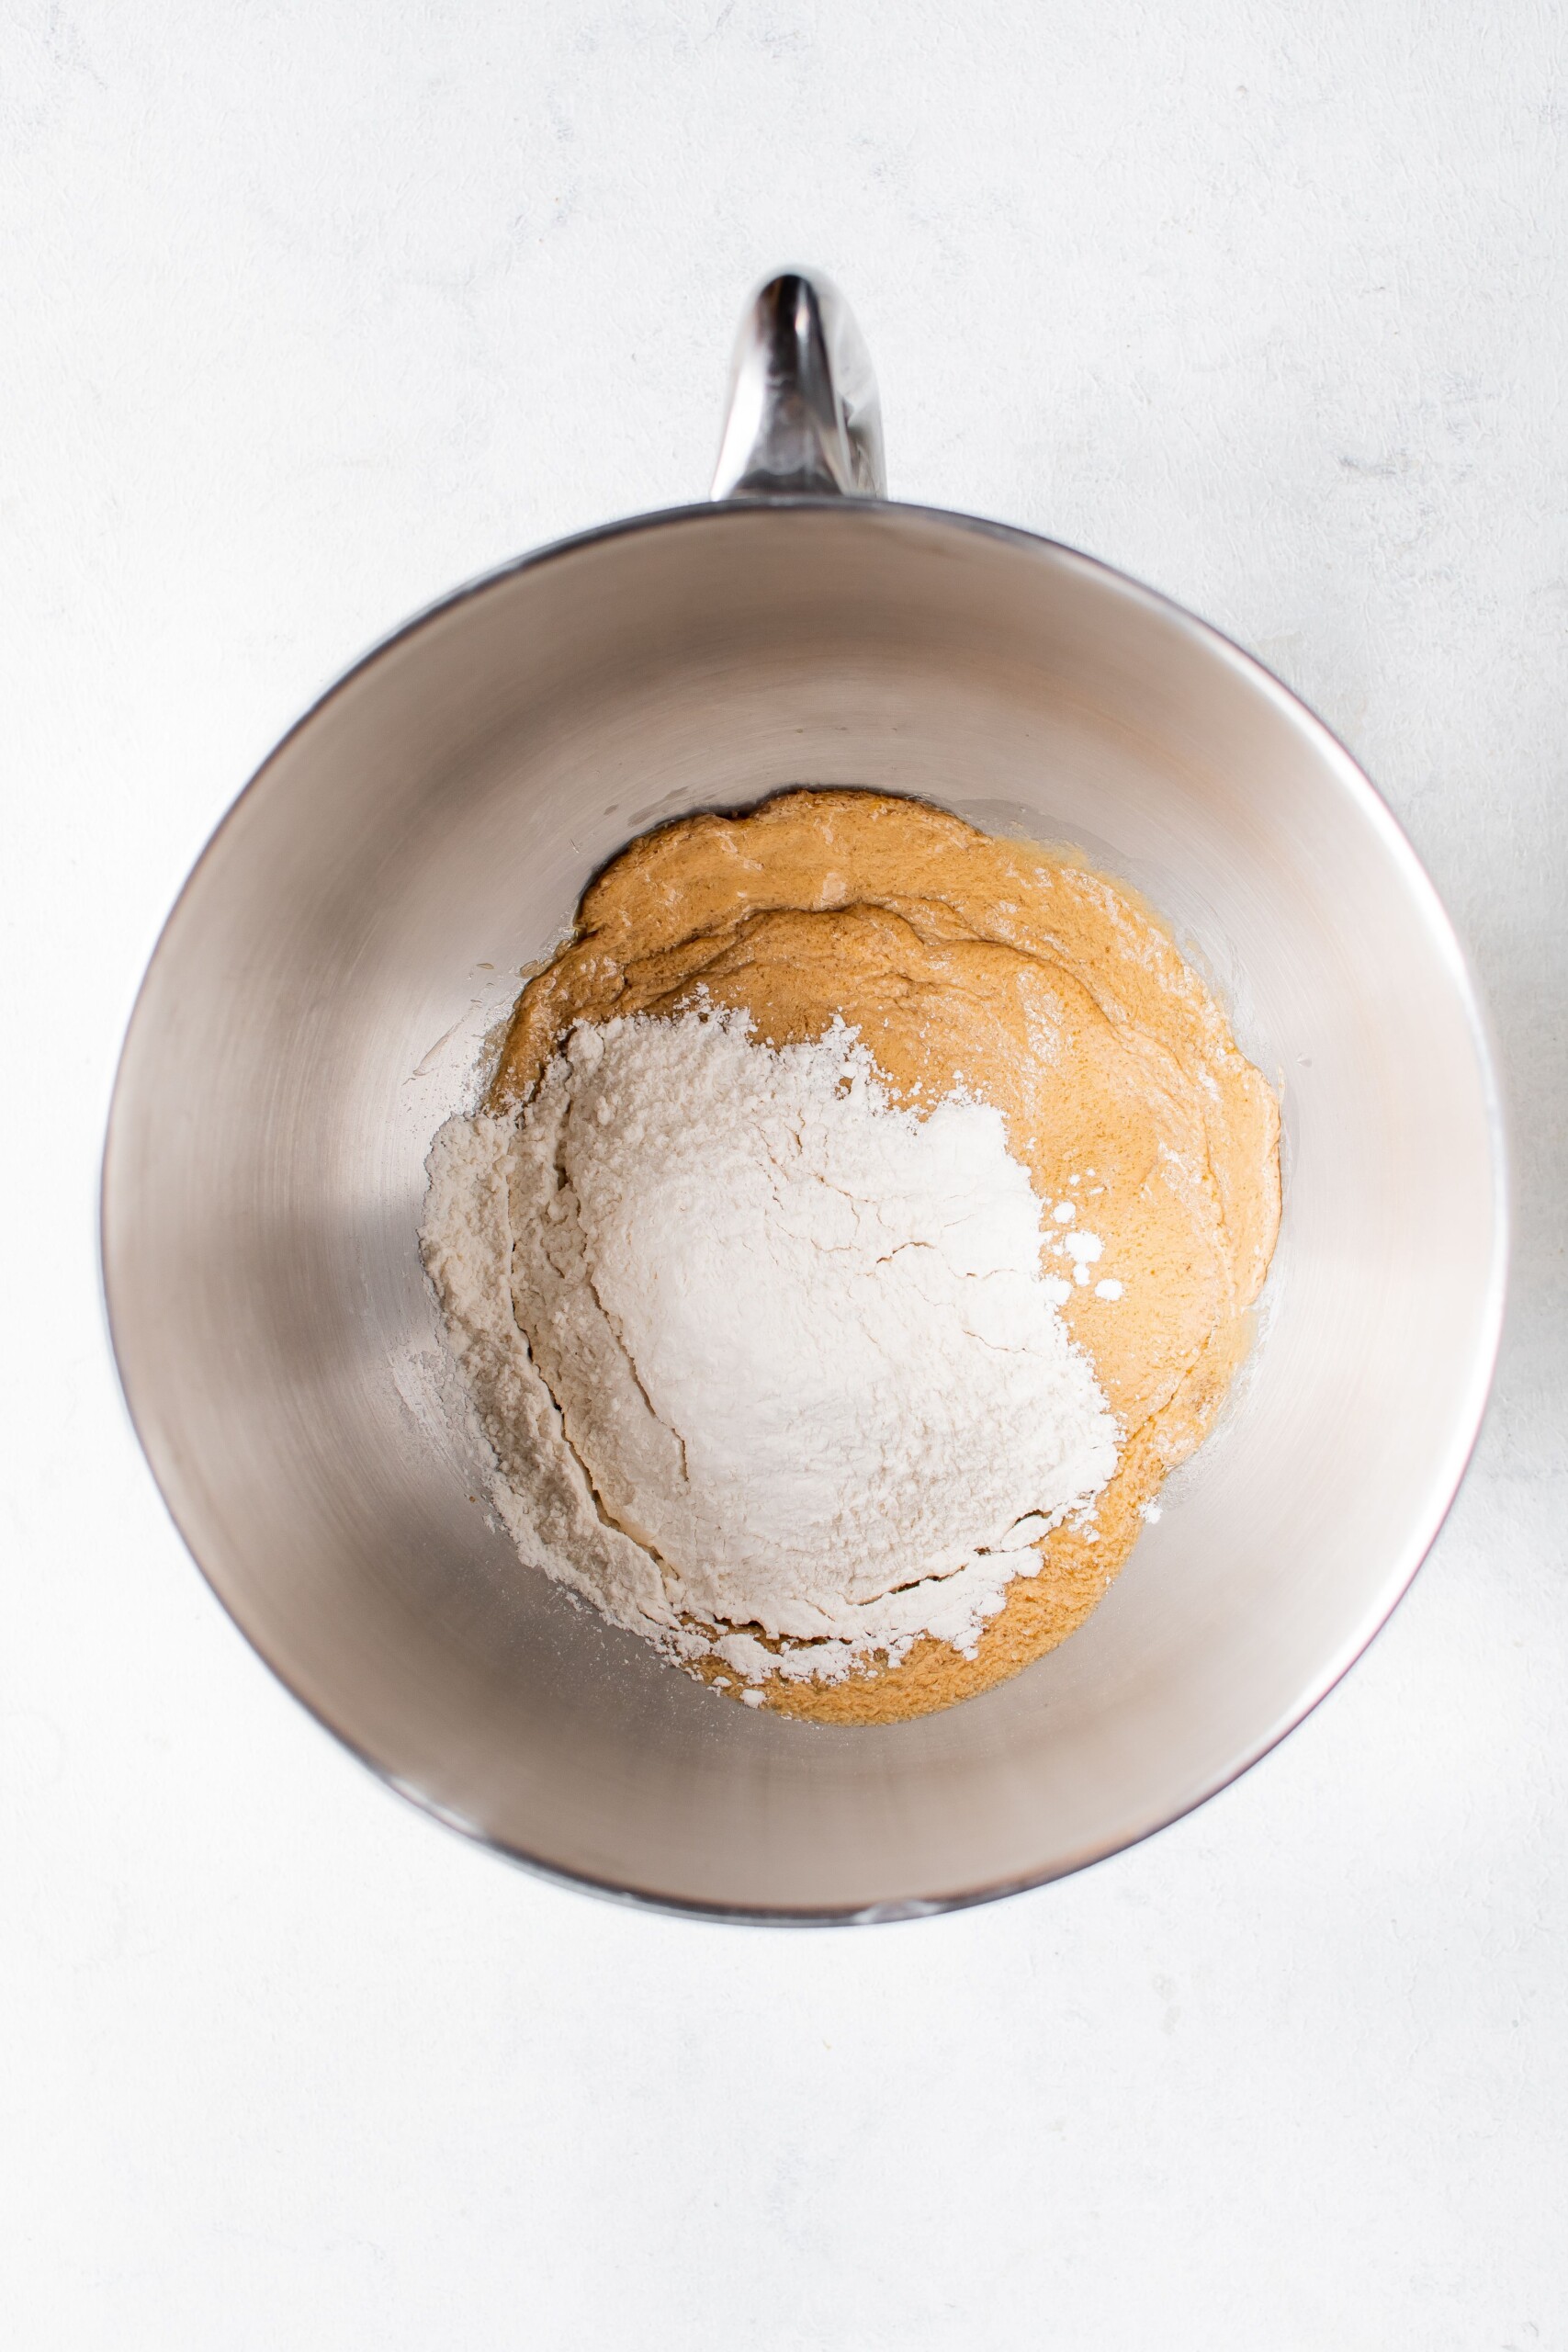 Skeleton cookie dough in a silver mixer bowl